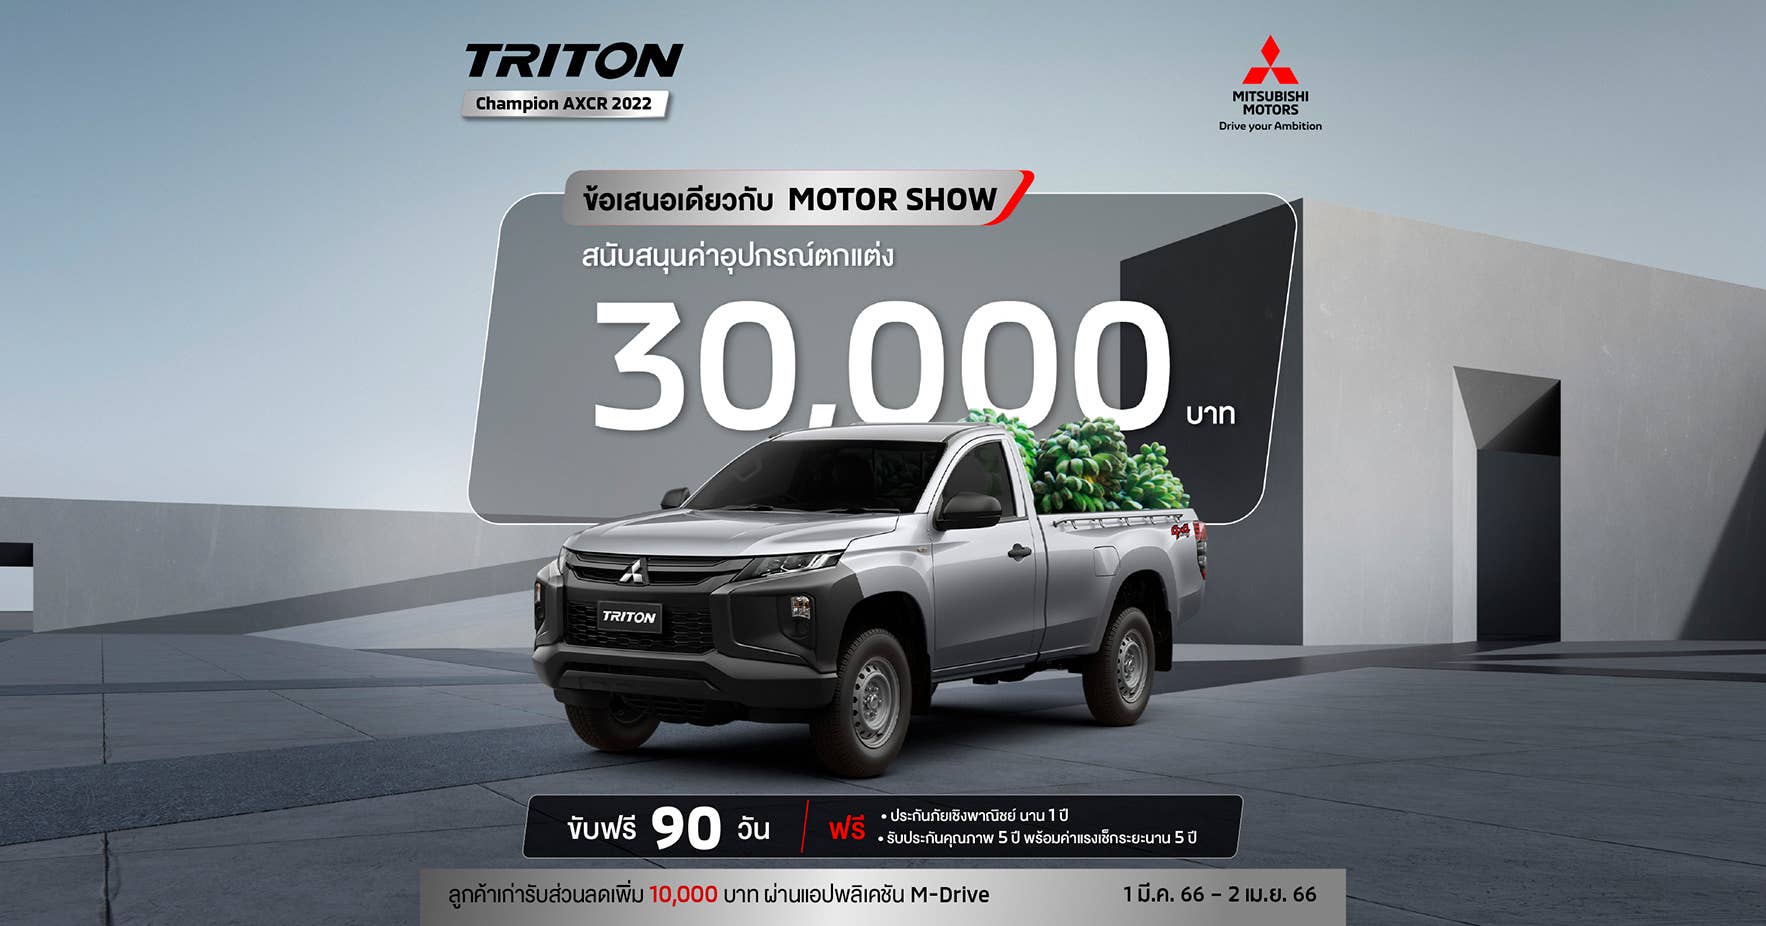 Triton สำหรับรุ่น ซิงเกิ้ล แค็บ (4WD) พร้อมรับ สิทธิพิเศษสนับสนุนค่าใช้จ่ายในการติดตั้งอุปกรณ์เสริม 30,000 บาท